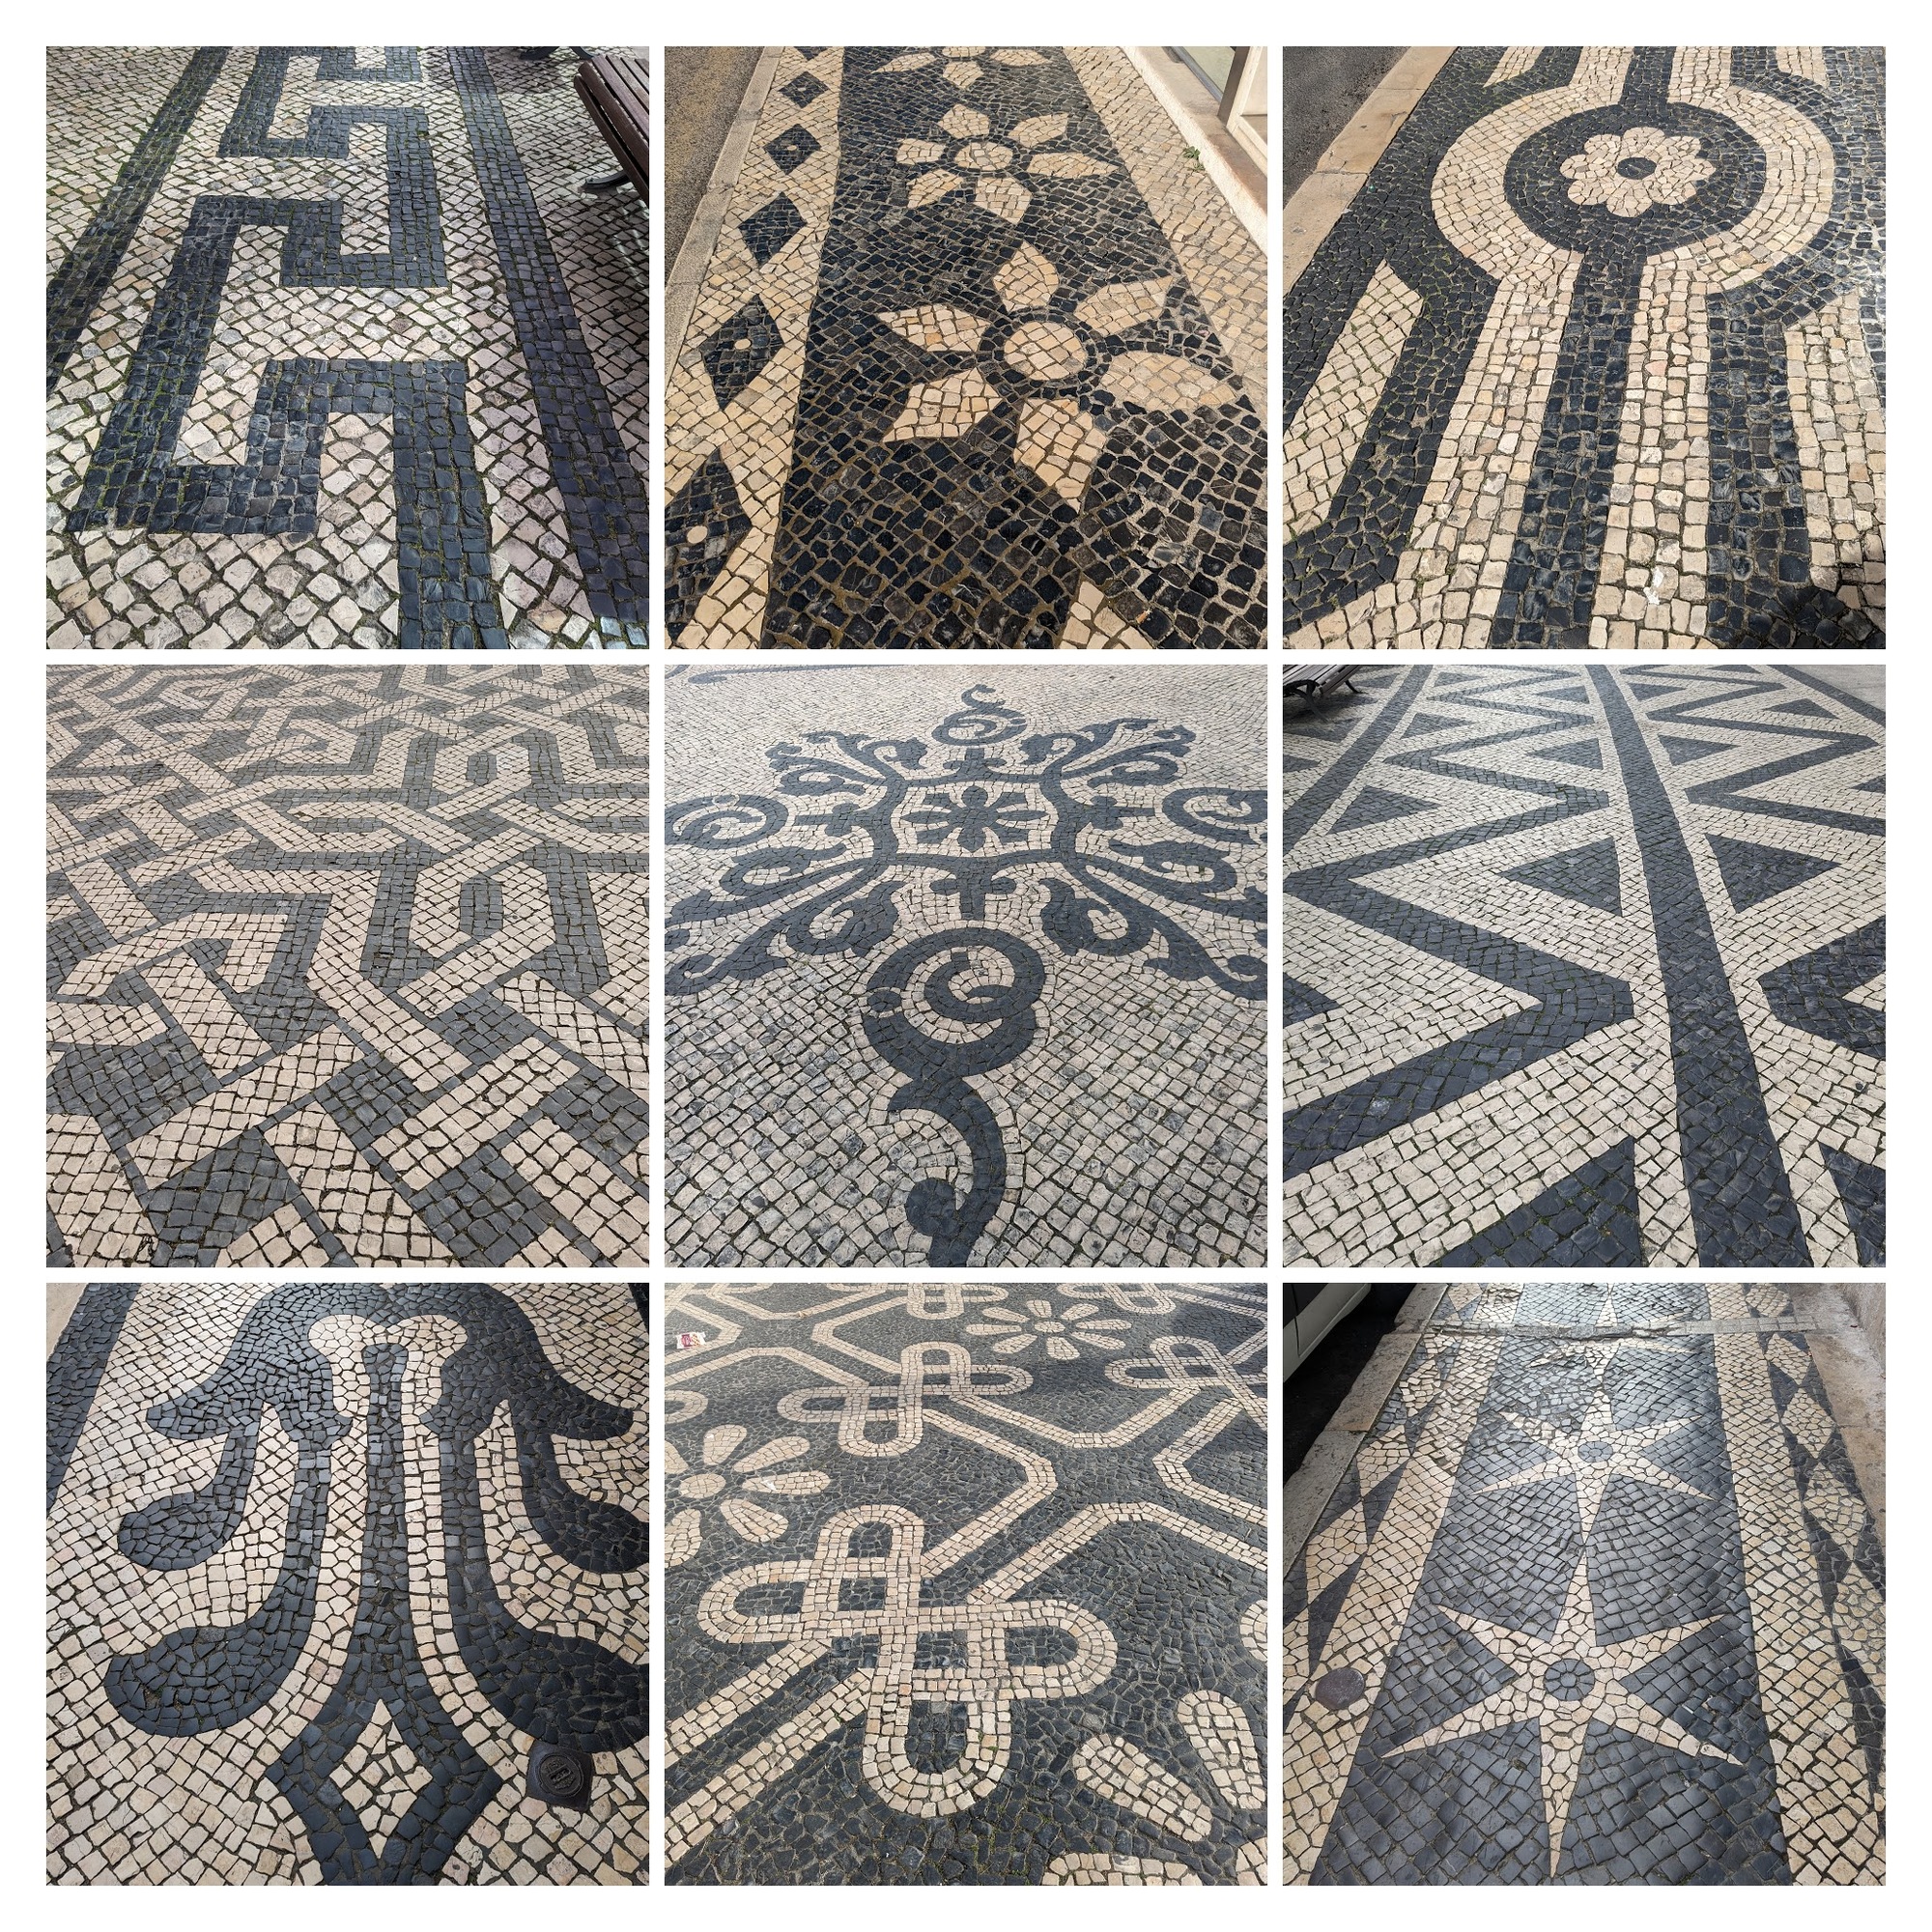 So many pretty tiles around Lisbon